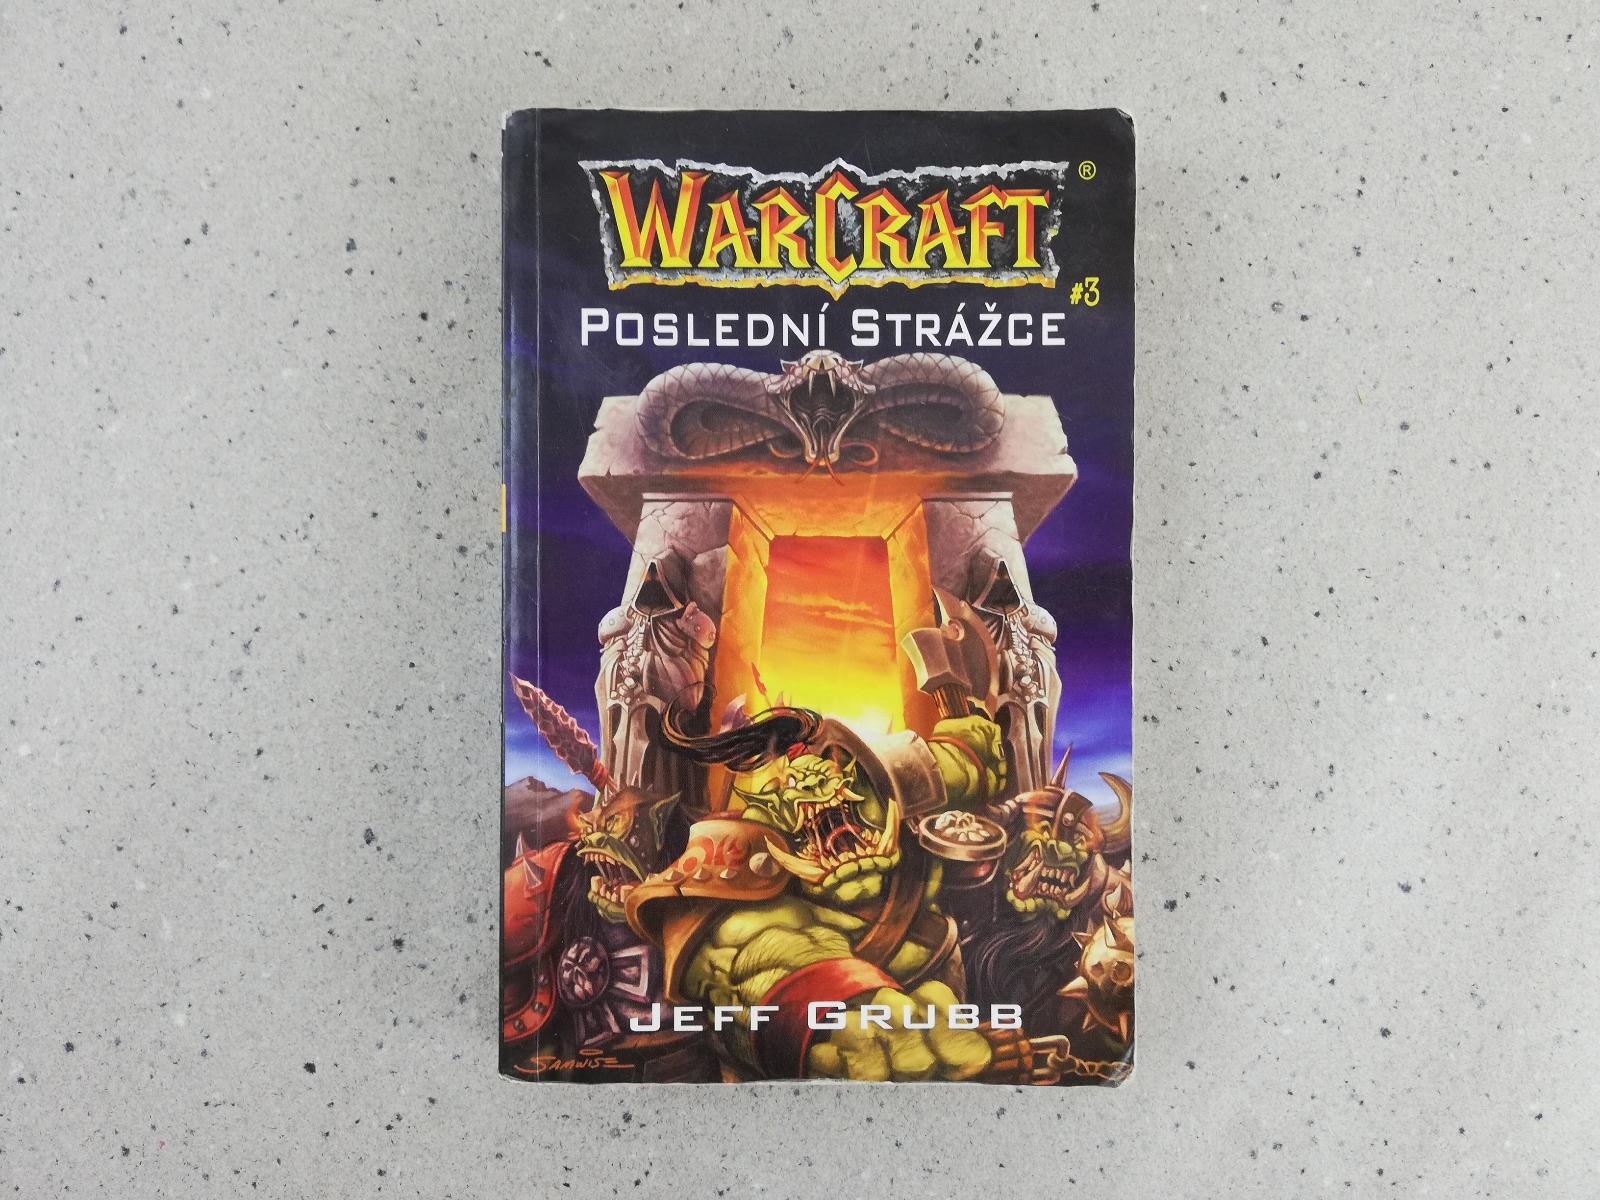 WARCRAFT #3 - Jeff Grubb - POSLEDNÁ STRÁŽCA - Knižné sci-fi / fantasy